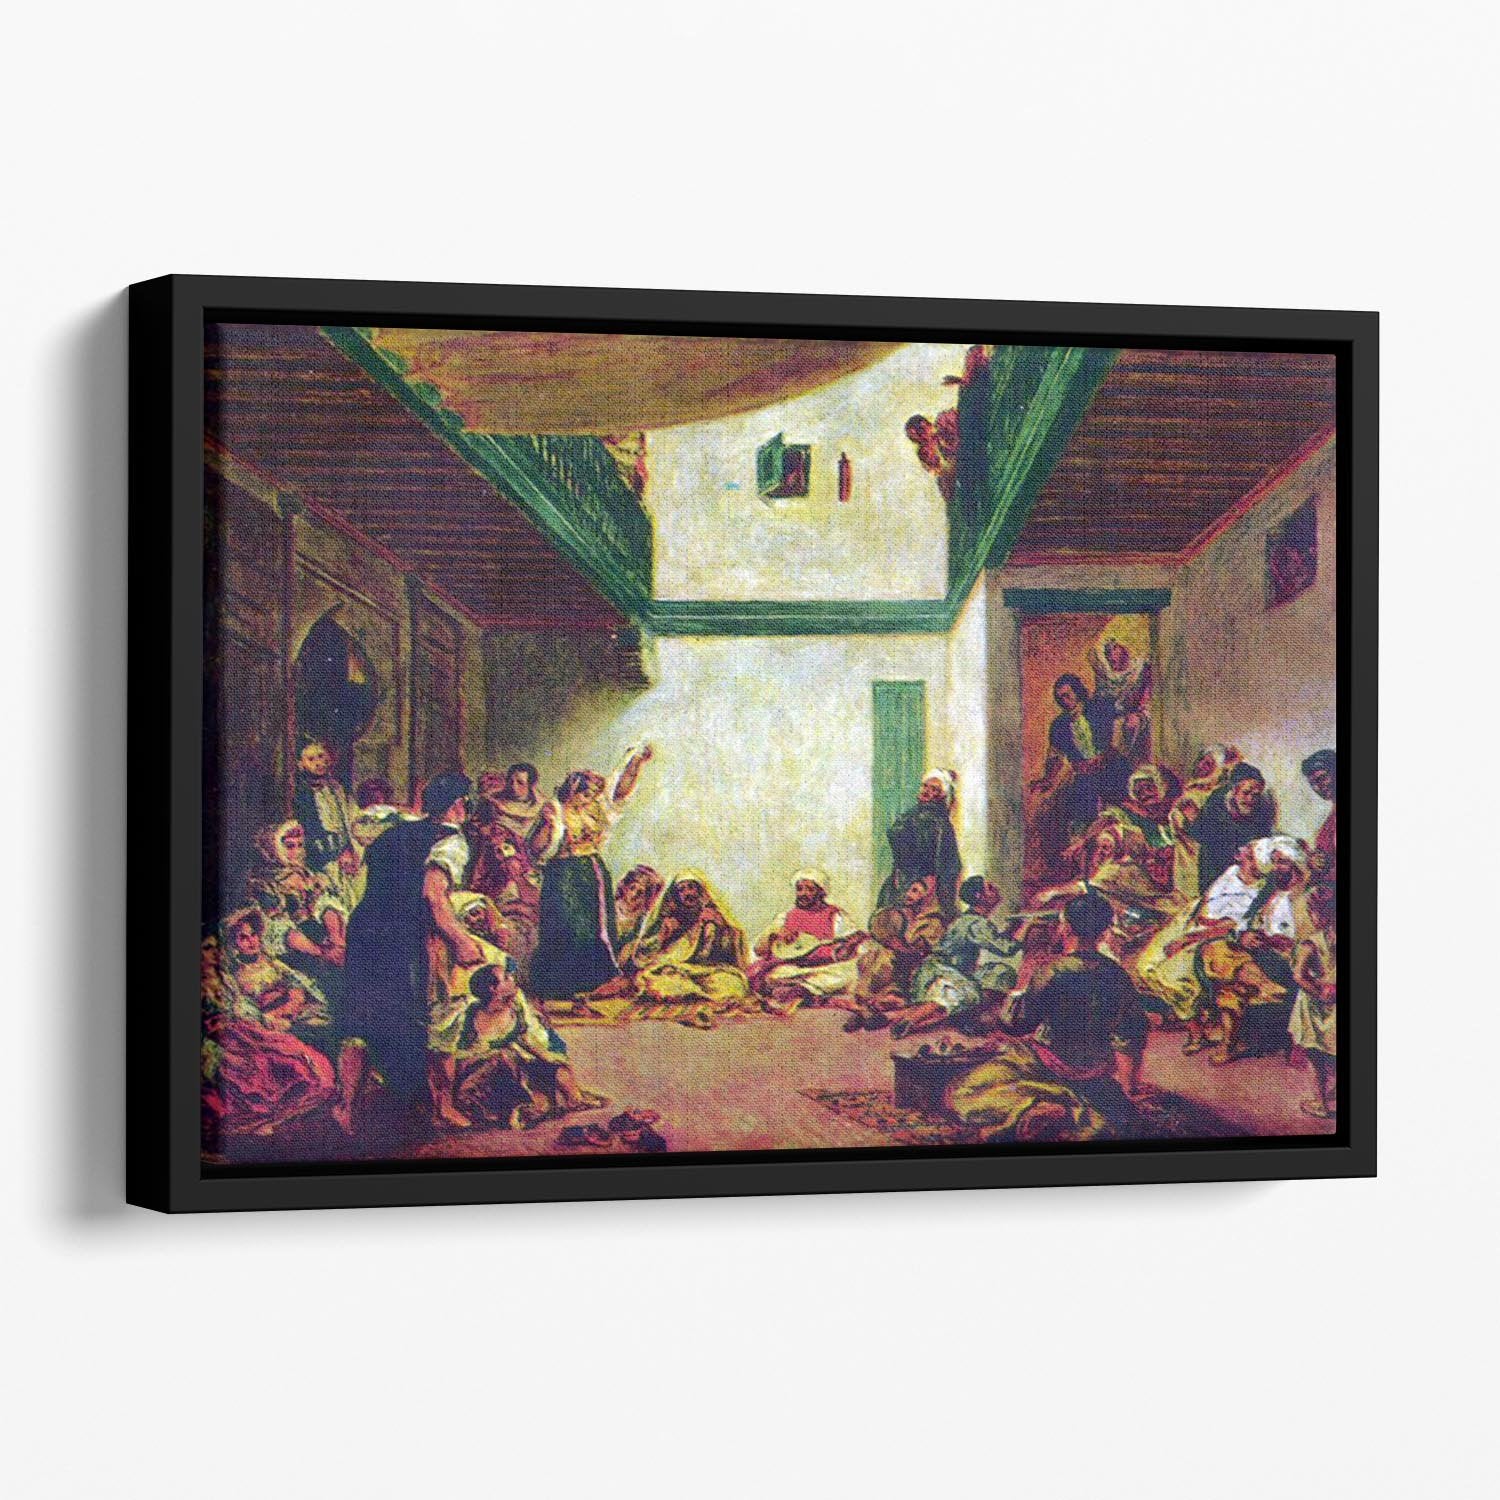 Jewish wedding after Delacroix by Renoir Floating Framed Canvas